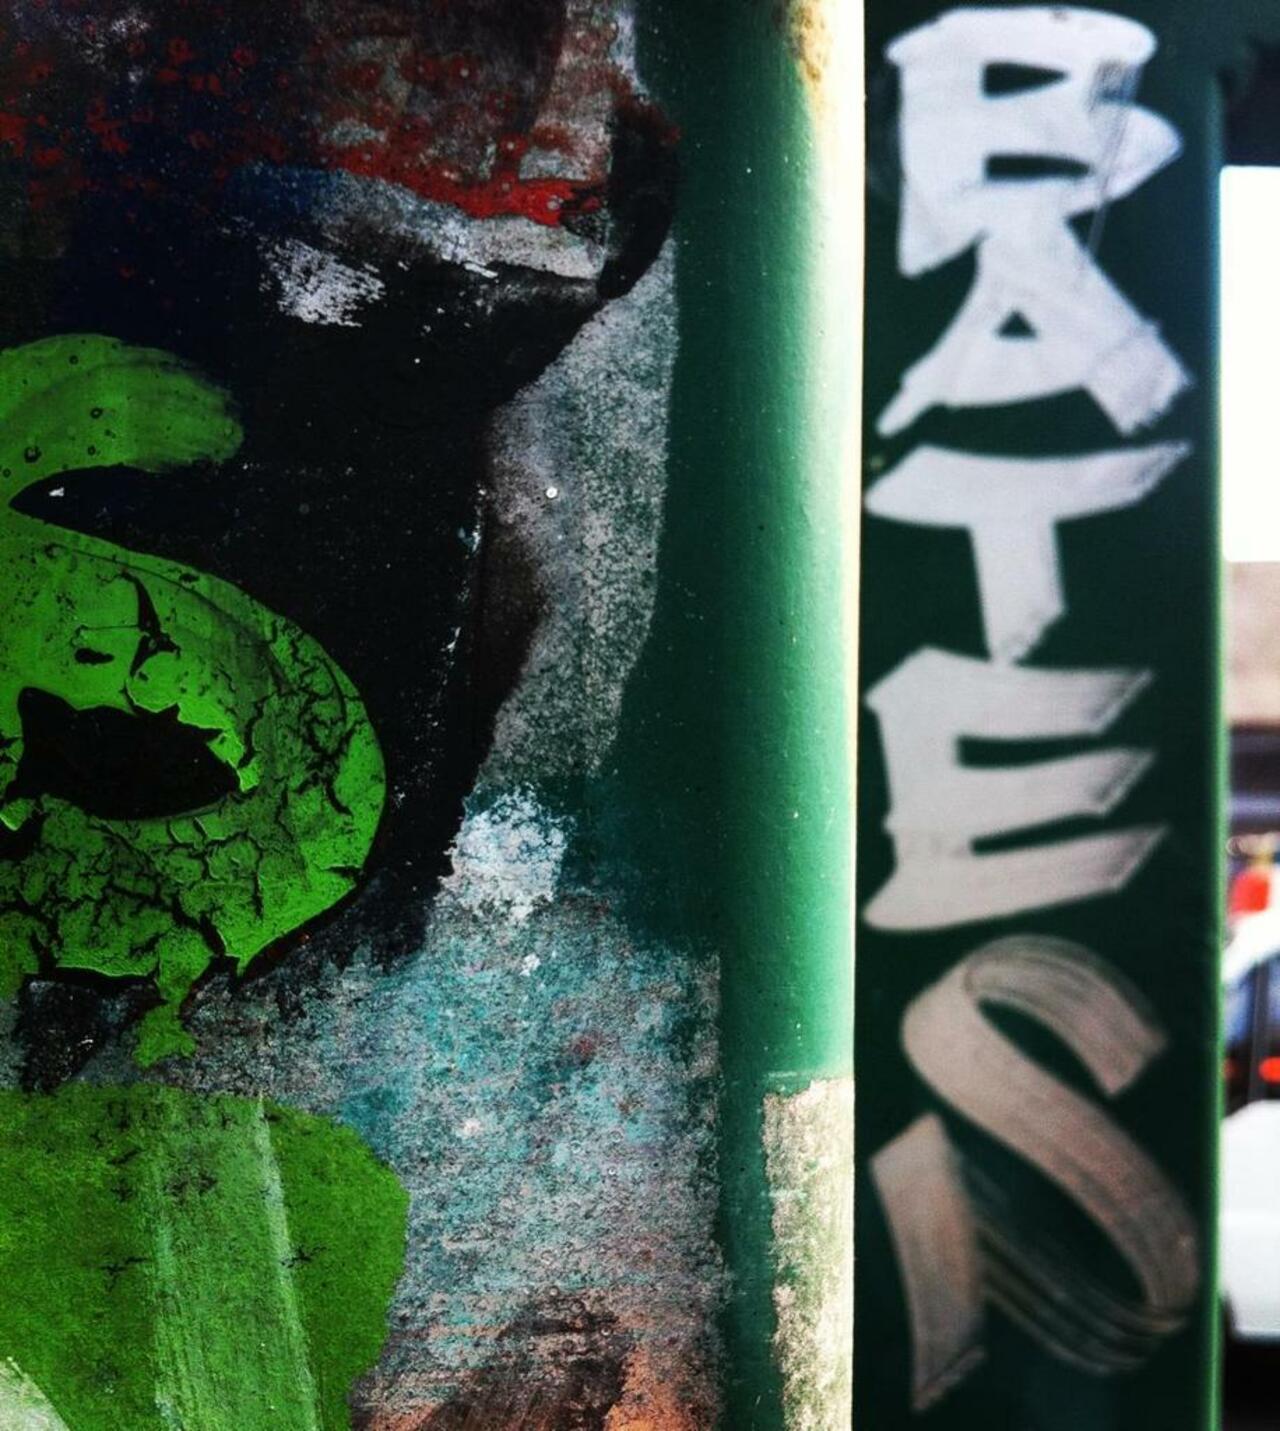 via #berlintags "http://ift.tt/1WqlDpk" #graffiti #streetart http://t.co/dIwXEdfJwA